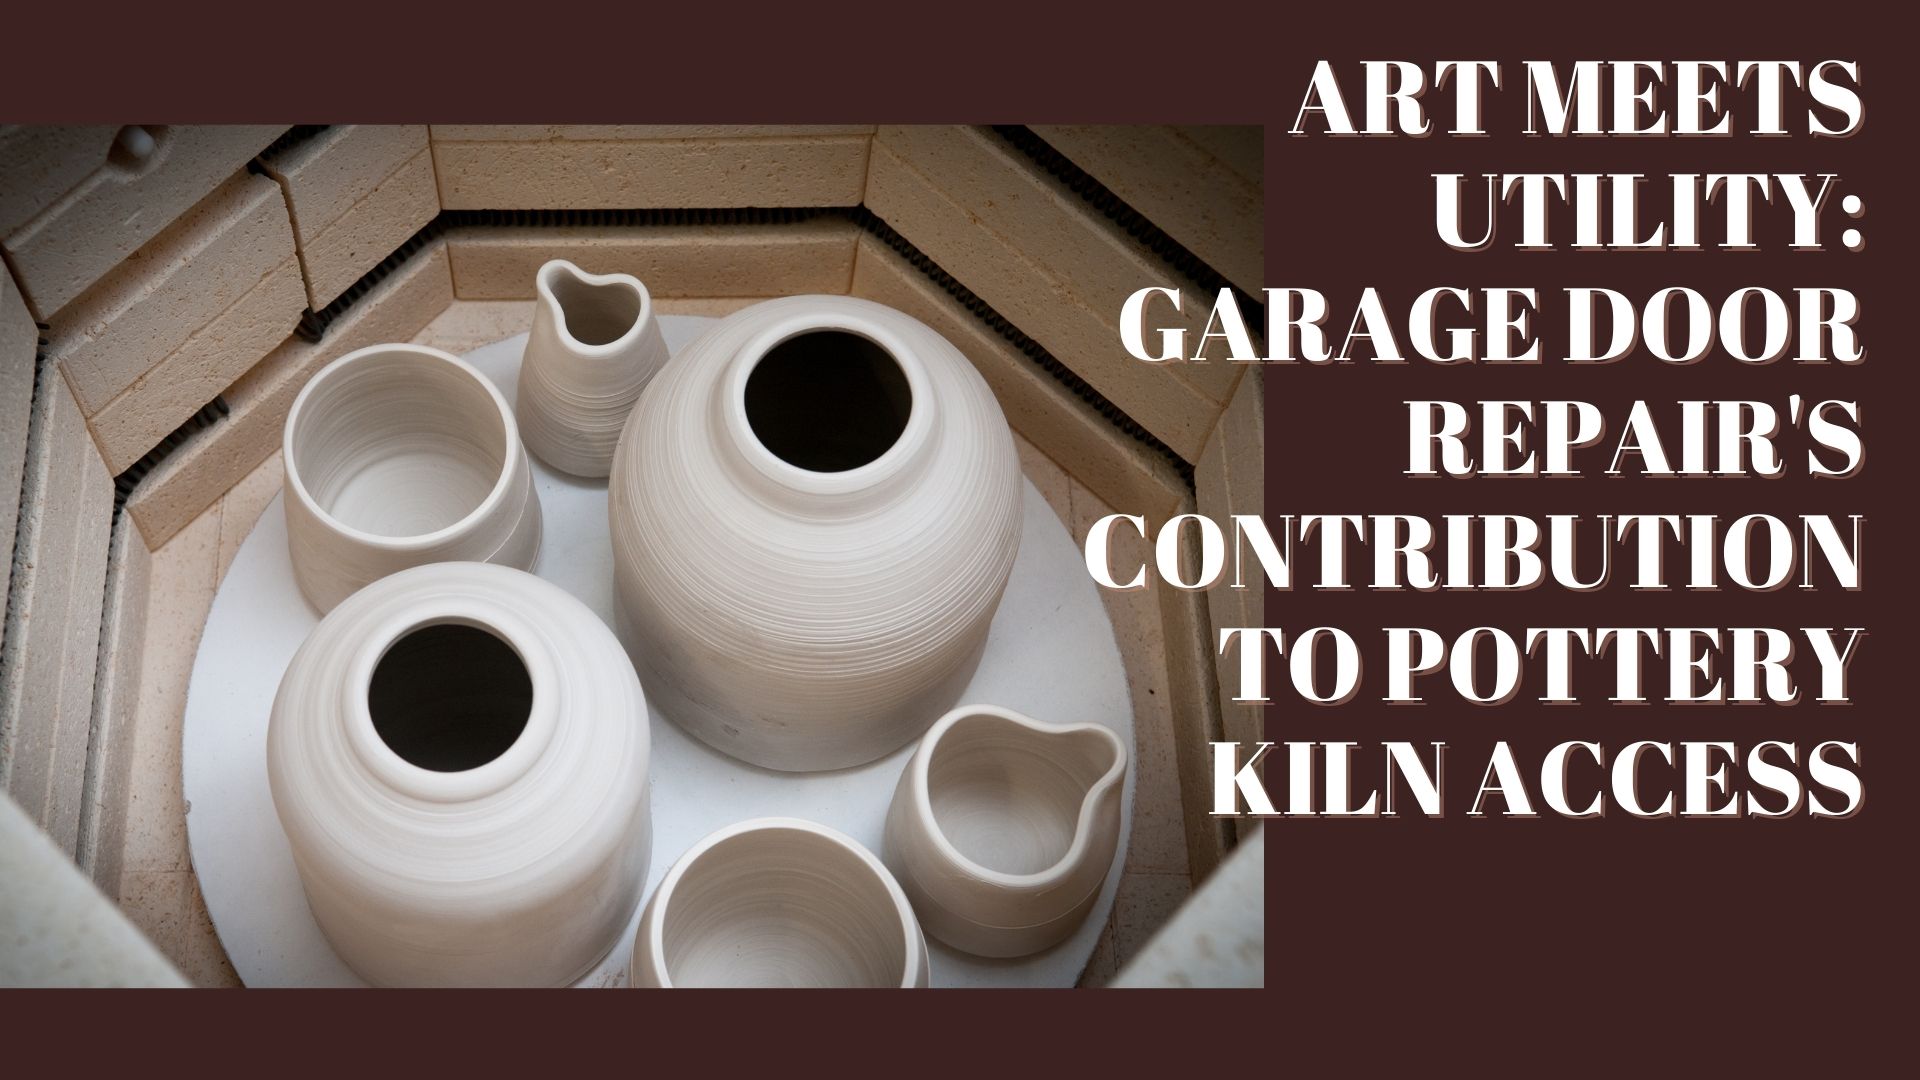 Garage Door Repair's Contribution to Pottery Kiln Access